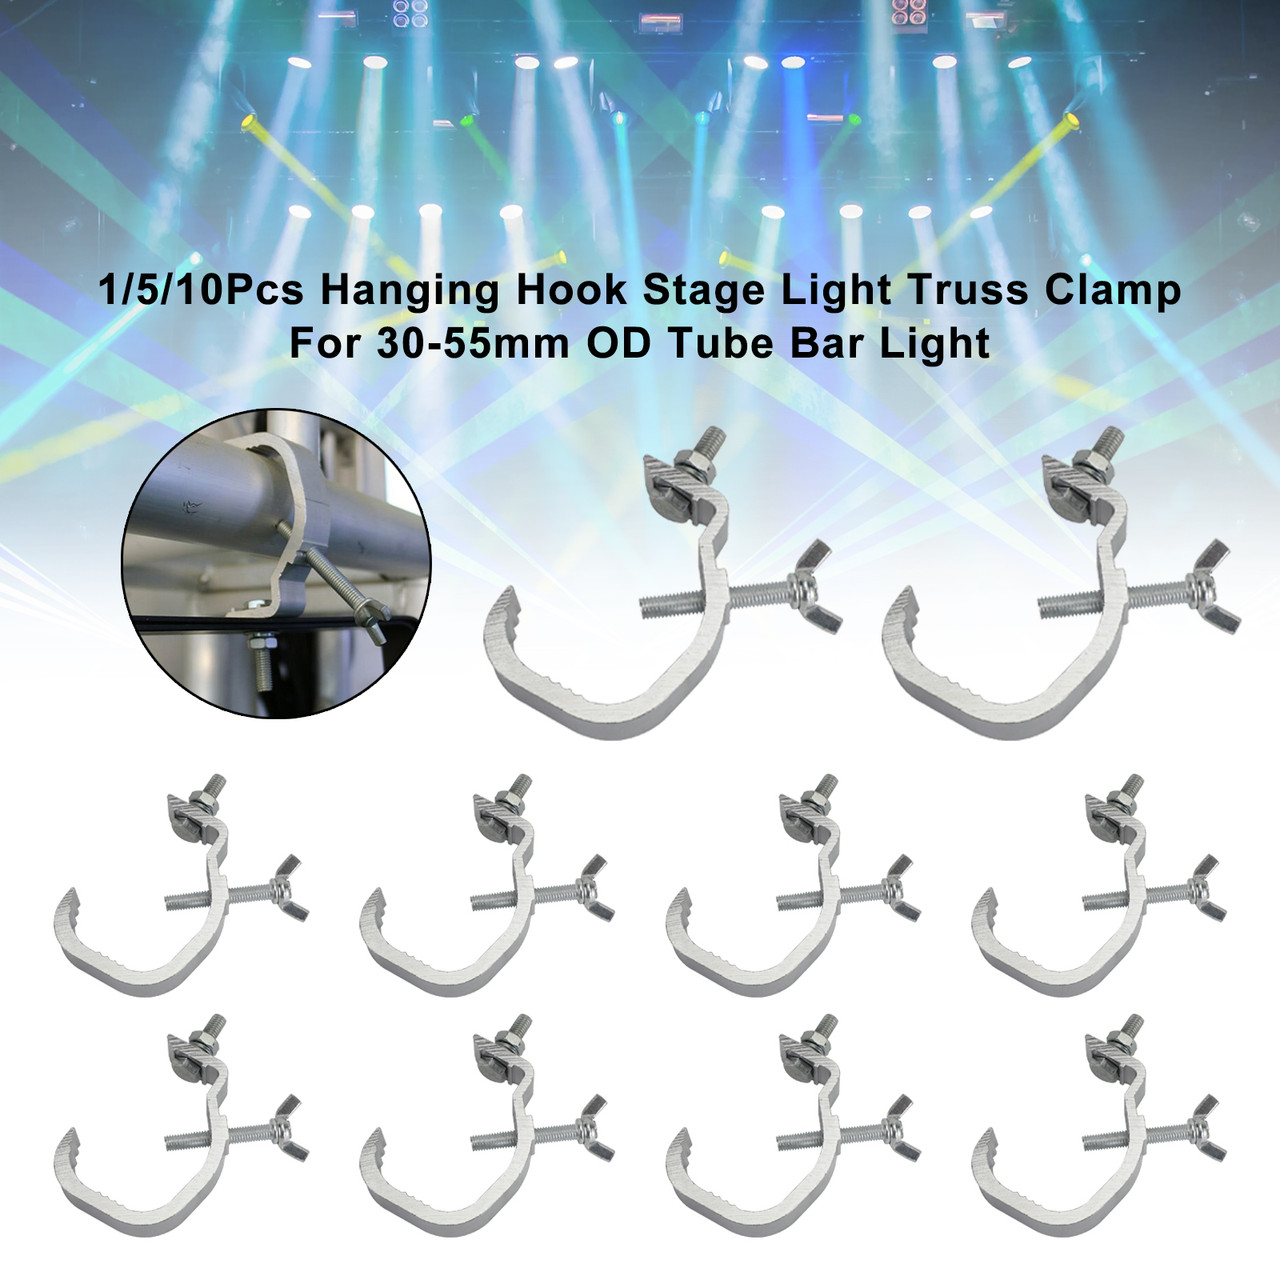 10PCS S Hanging Hook Stage Light Truss Clamp For 30-55mm OD Tube Bar Light